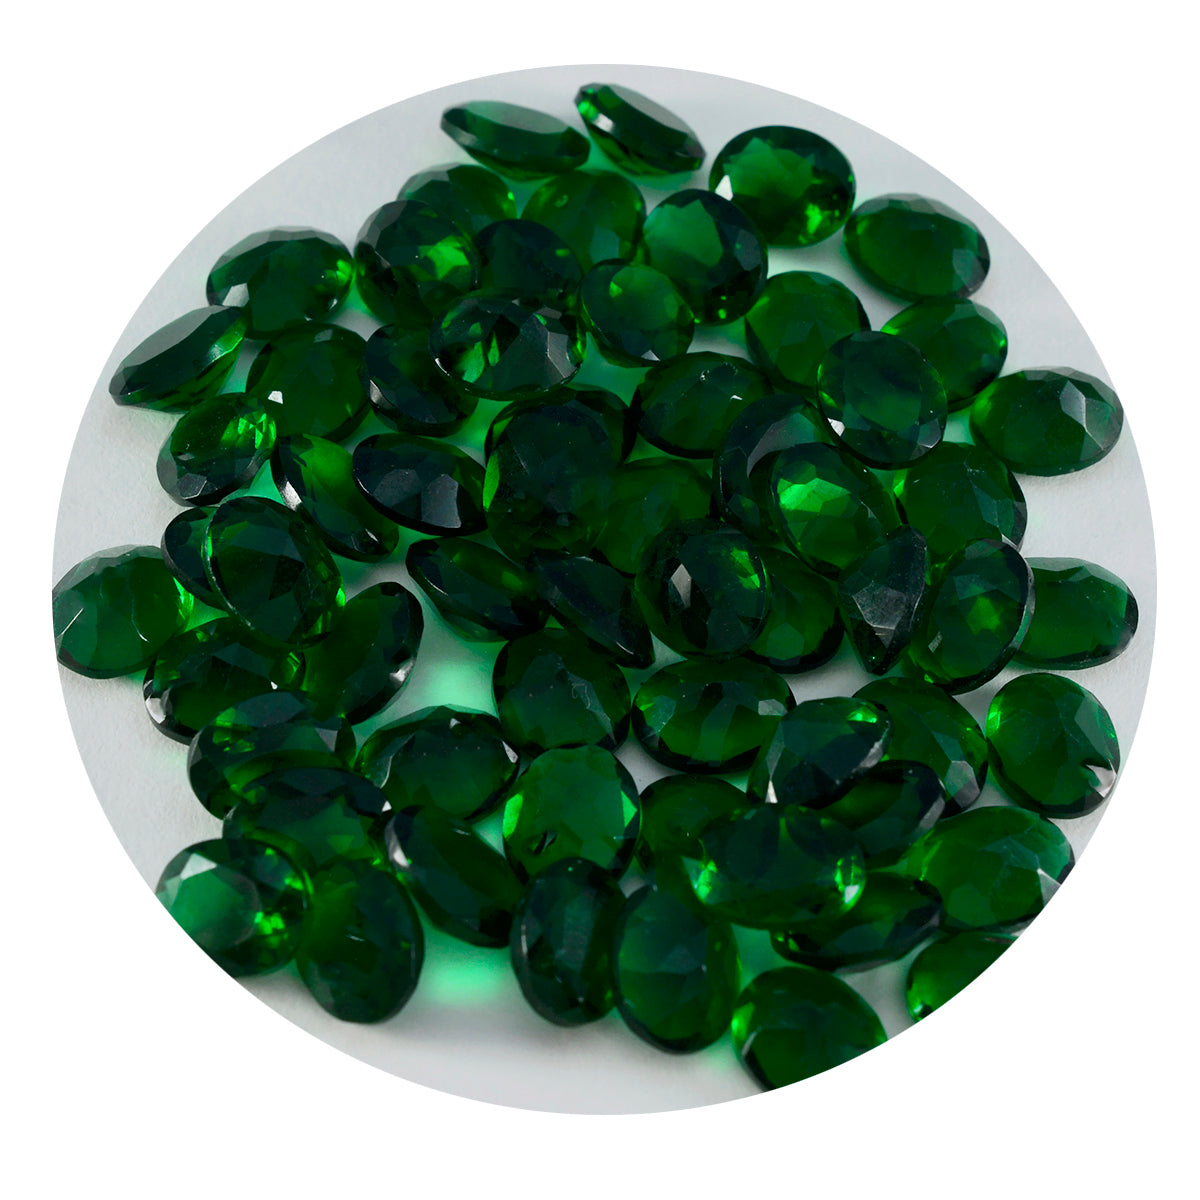 riyogems 1 st grön smaragd cz fasetterad 5x7 mm oval form attraktiv kvalitet lös sten